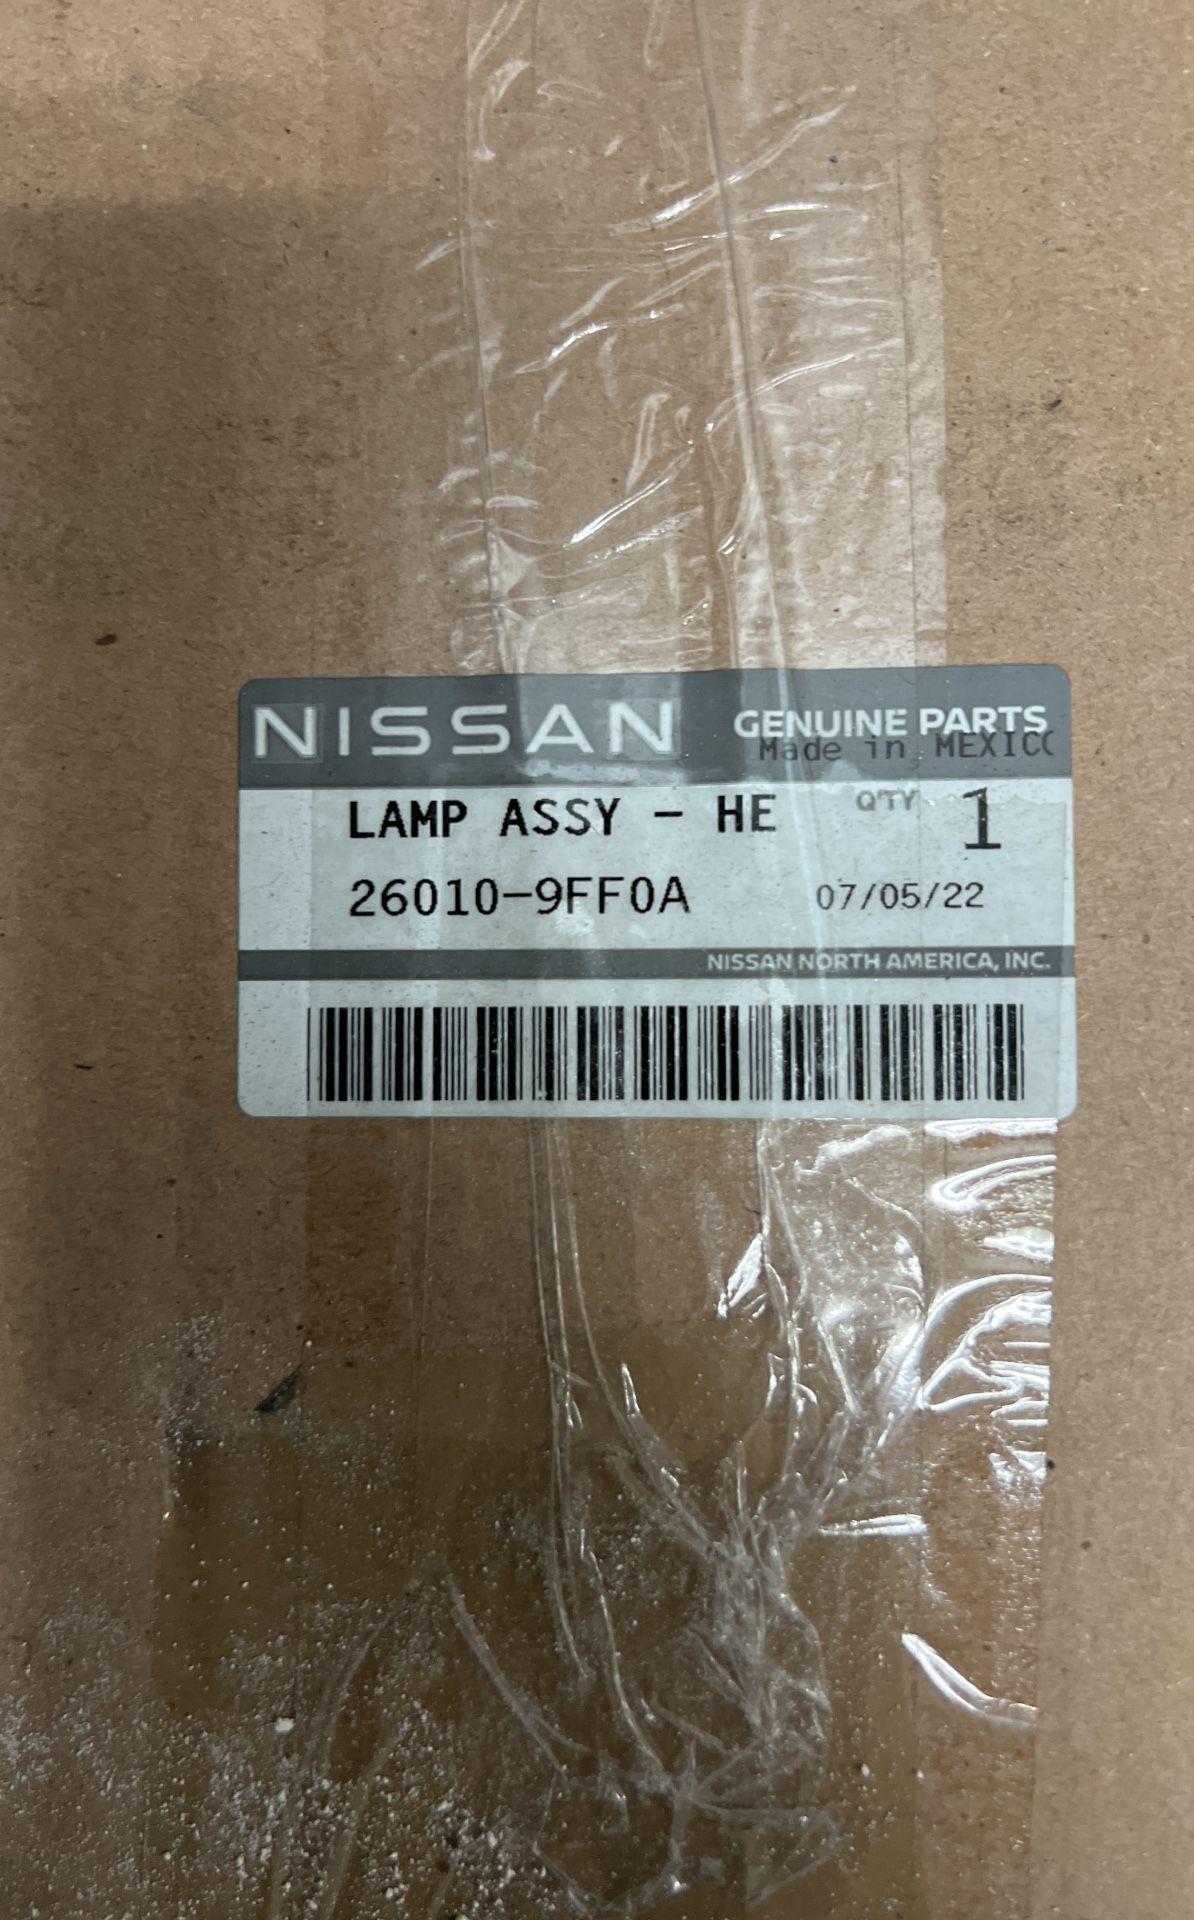 2014 Nissan Titan Factory Original Headlights 